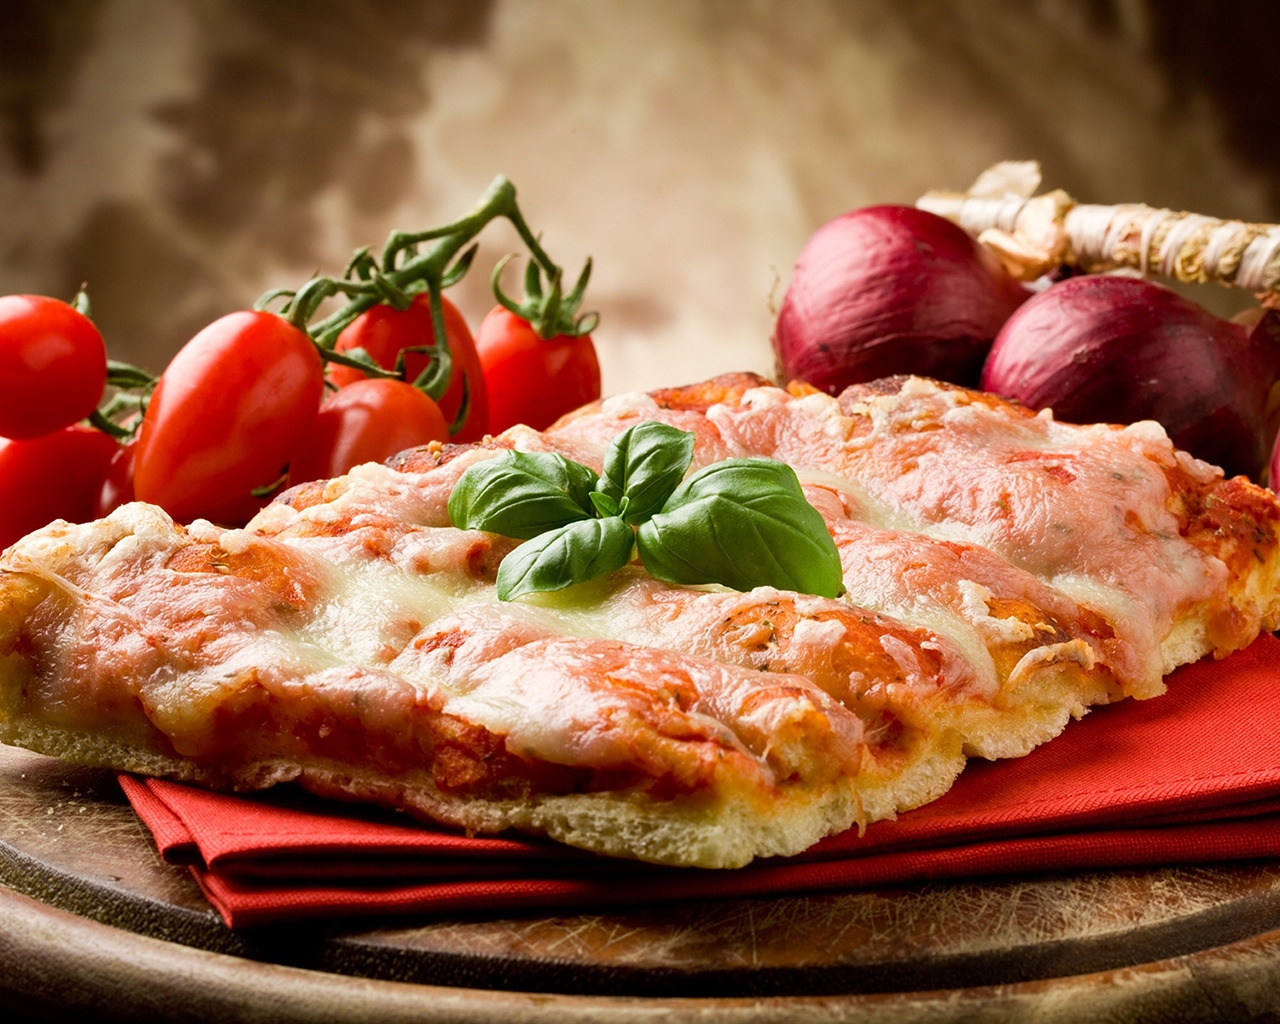 Italian Pizza Slice for 1280 x 1024 resolution